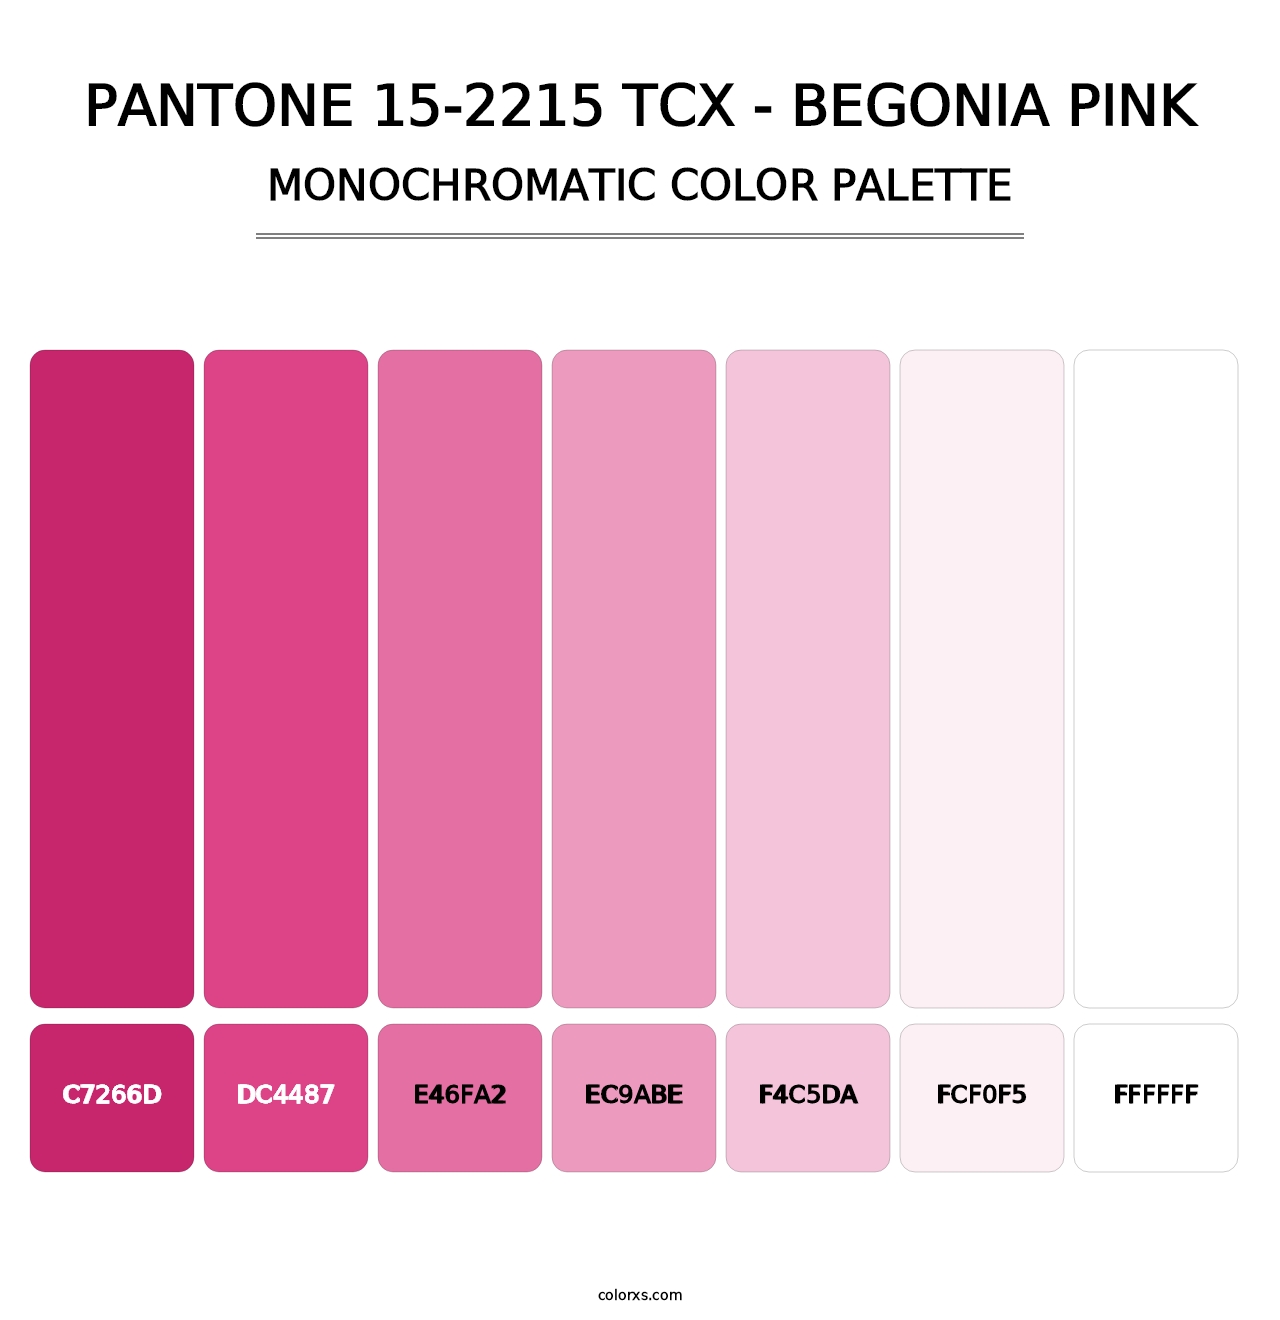 PANTONE 15-2215 TCX - Begonia Pink - Monochromatic Color Palette